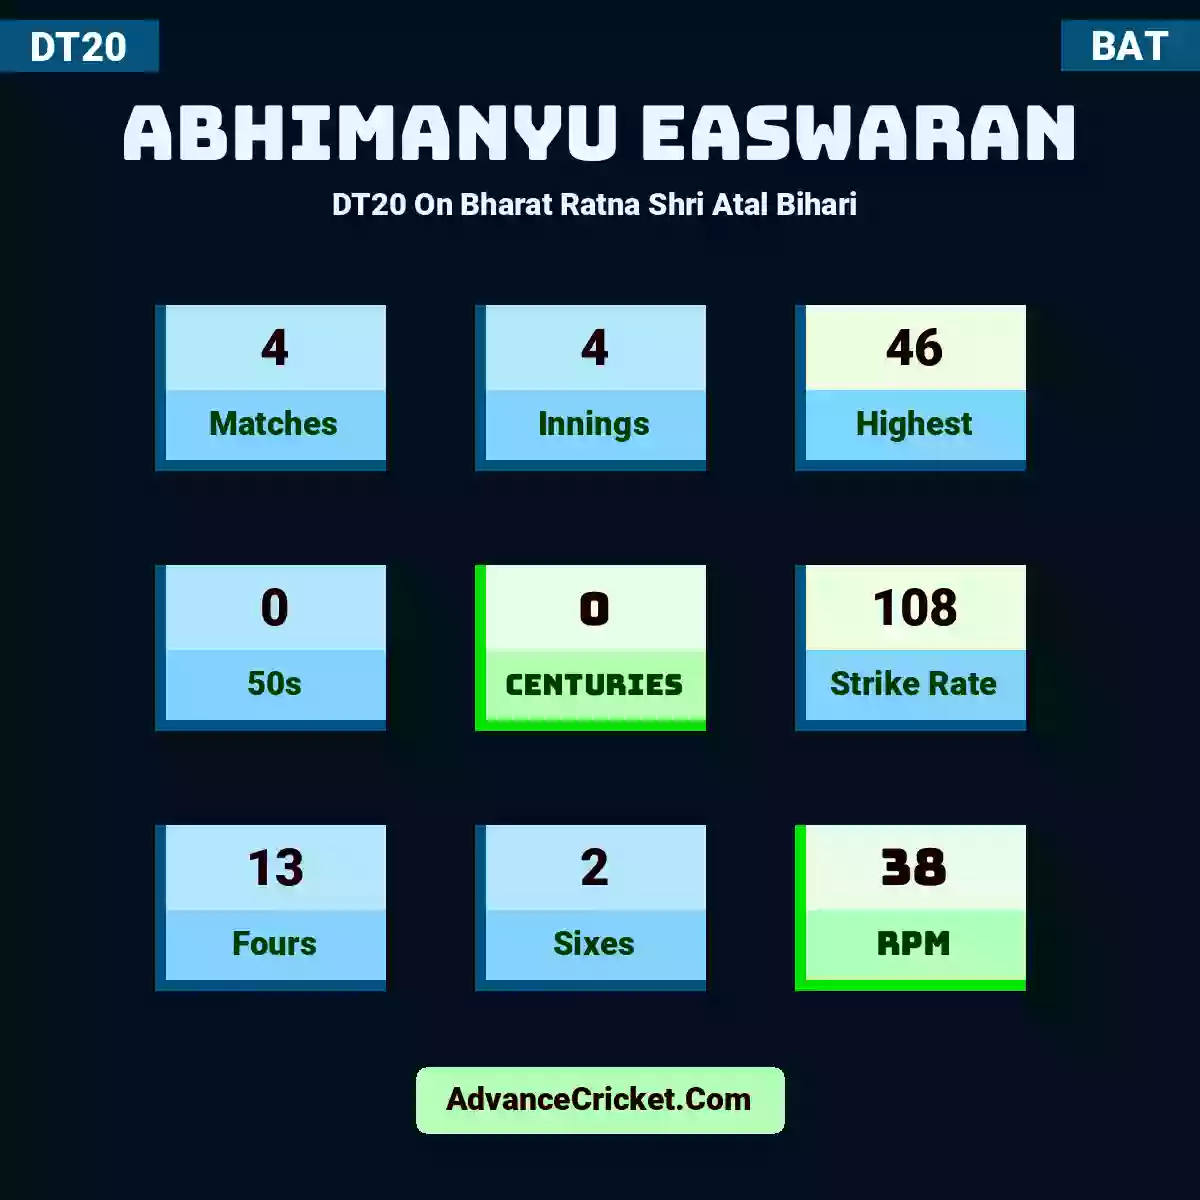 Abhimanyu Easwaran DT20  On Bharat Ratna Shri Atal Bihari , Abhimanyu Easwaran played 4 matches, scored 46 runs as highest, 0 half-centuries, and 0 centuries, with a strike rate of 108. A.Easwaran hit 13 fours and 2 sixes, with an RPM of 38.